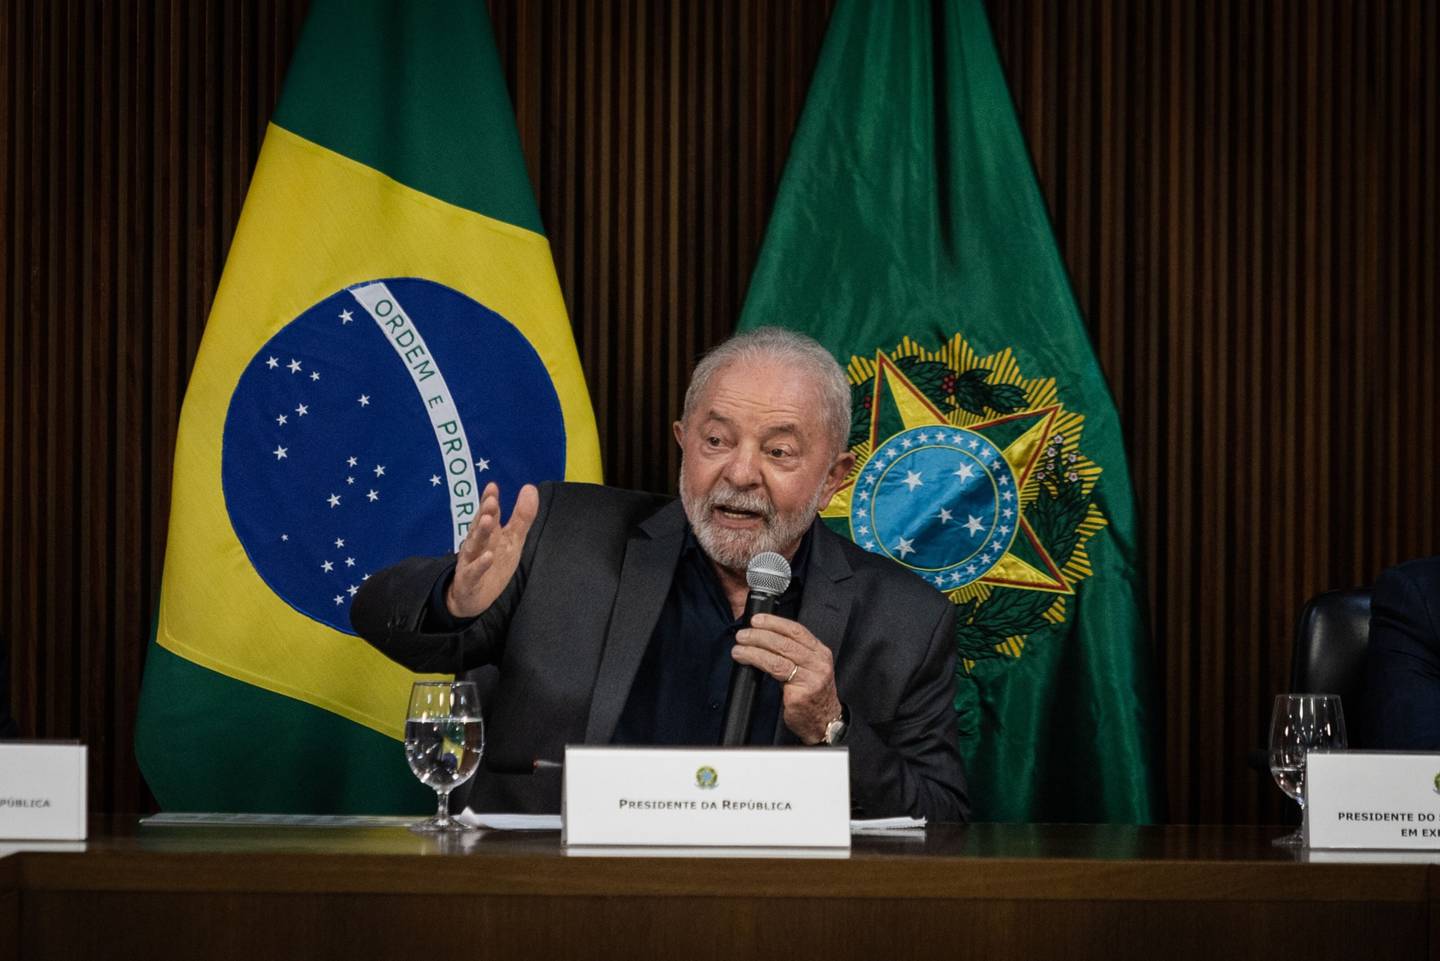 Luiz Inácio Lula da Silva, Presidente de Brasil